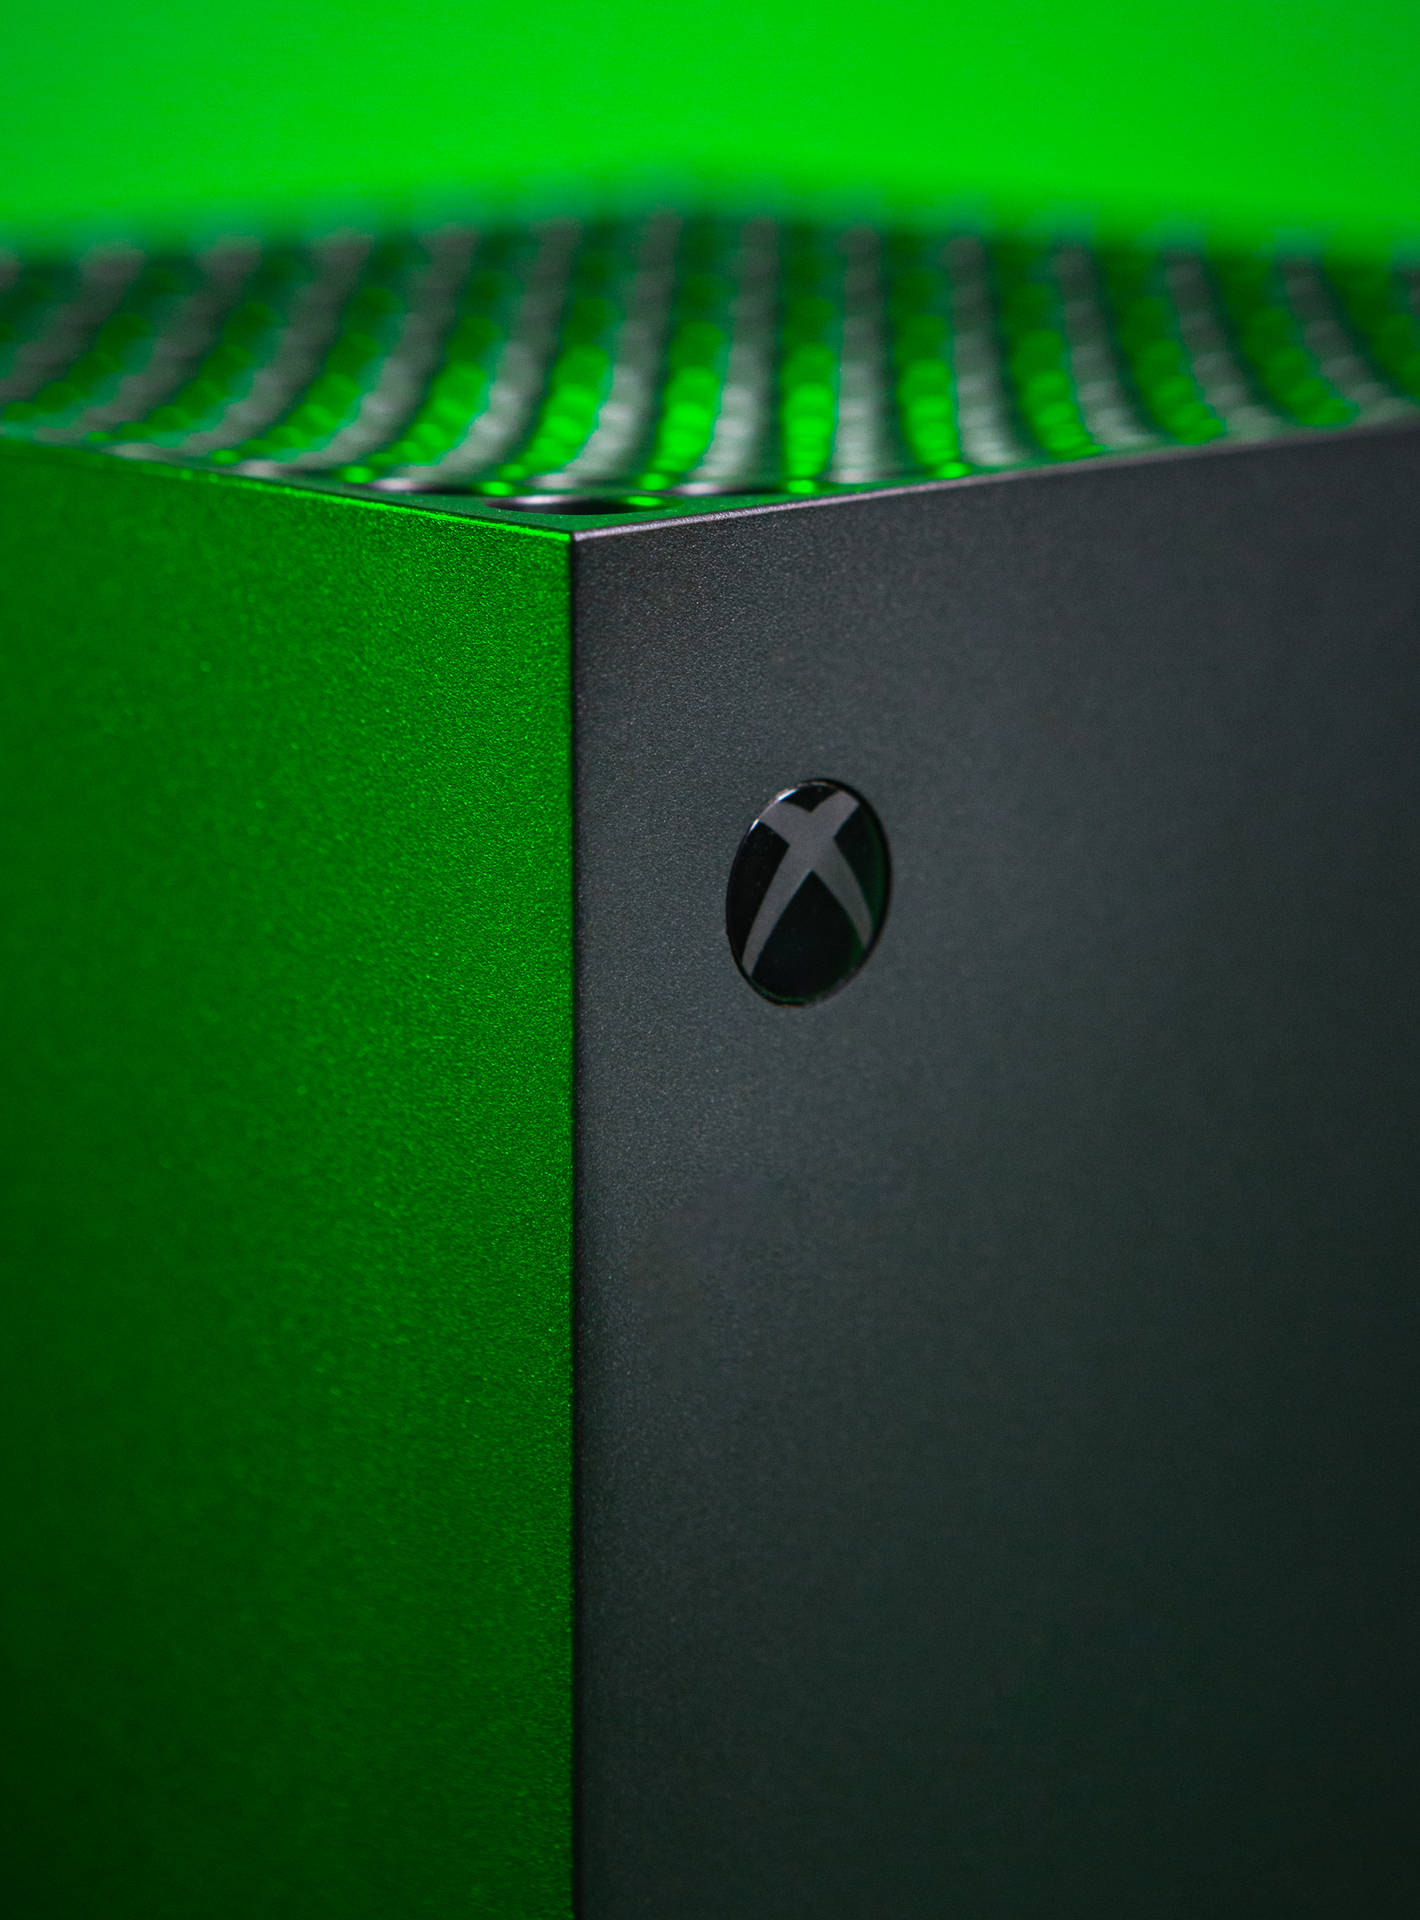 Green Xbox One X Console Wallpaper